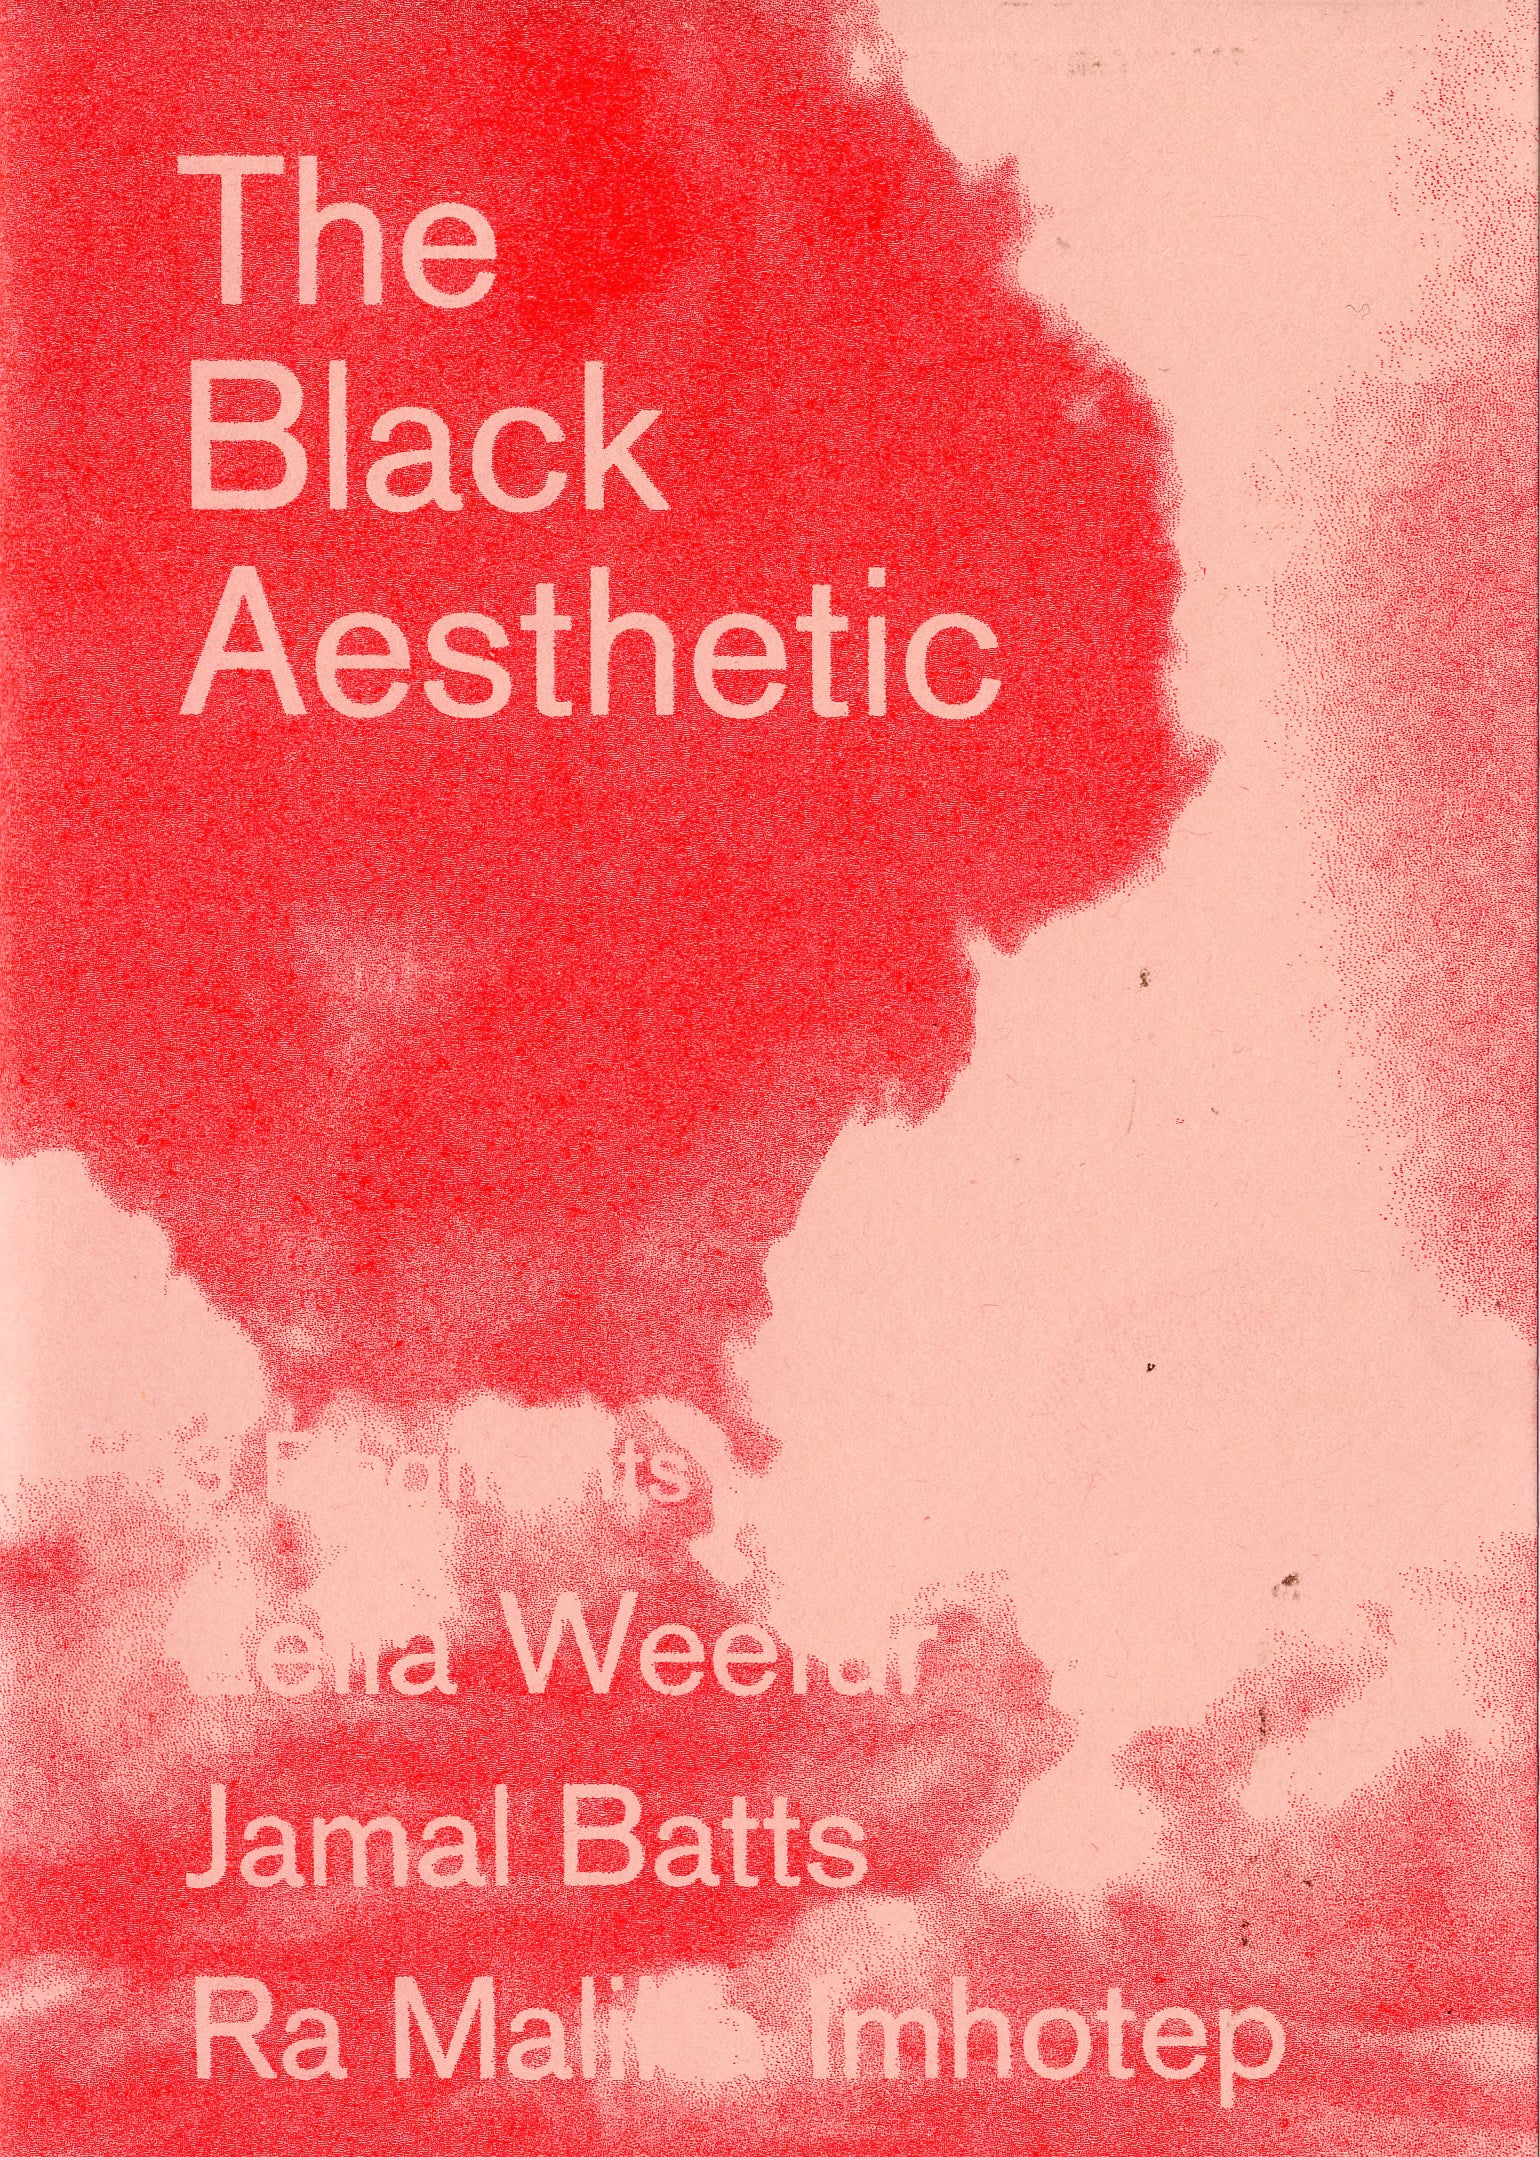 The Black Aesthetic: 3 Fragments